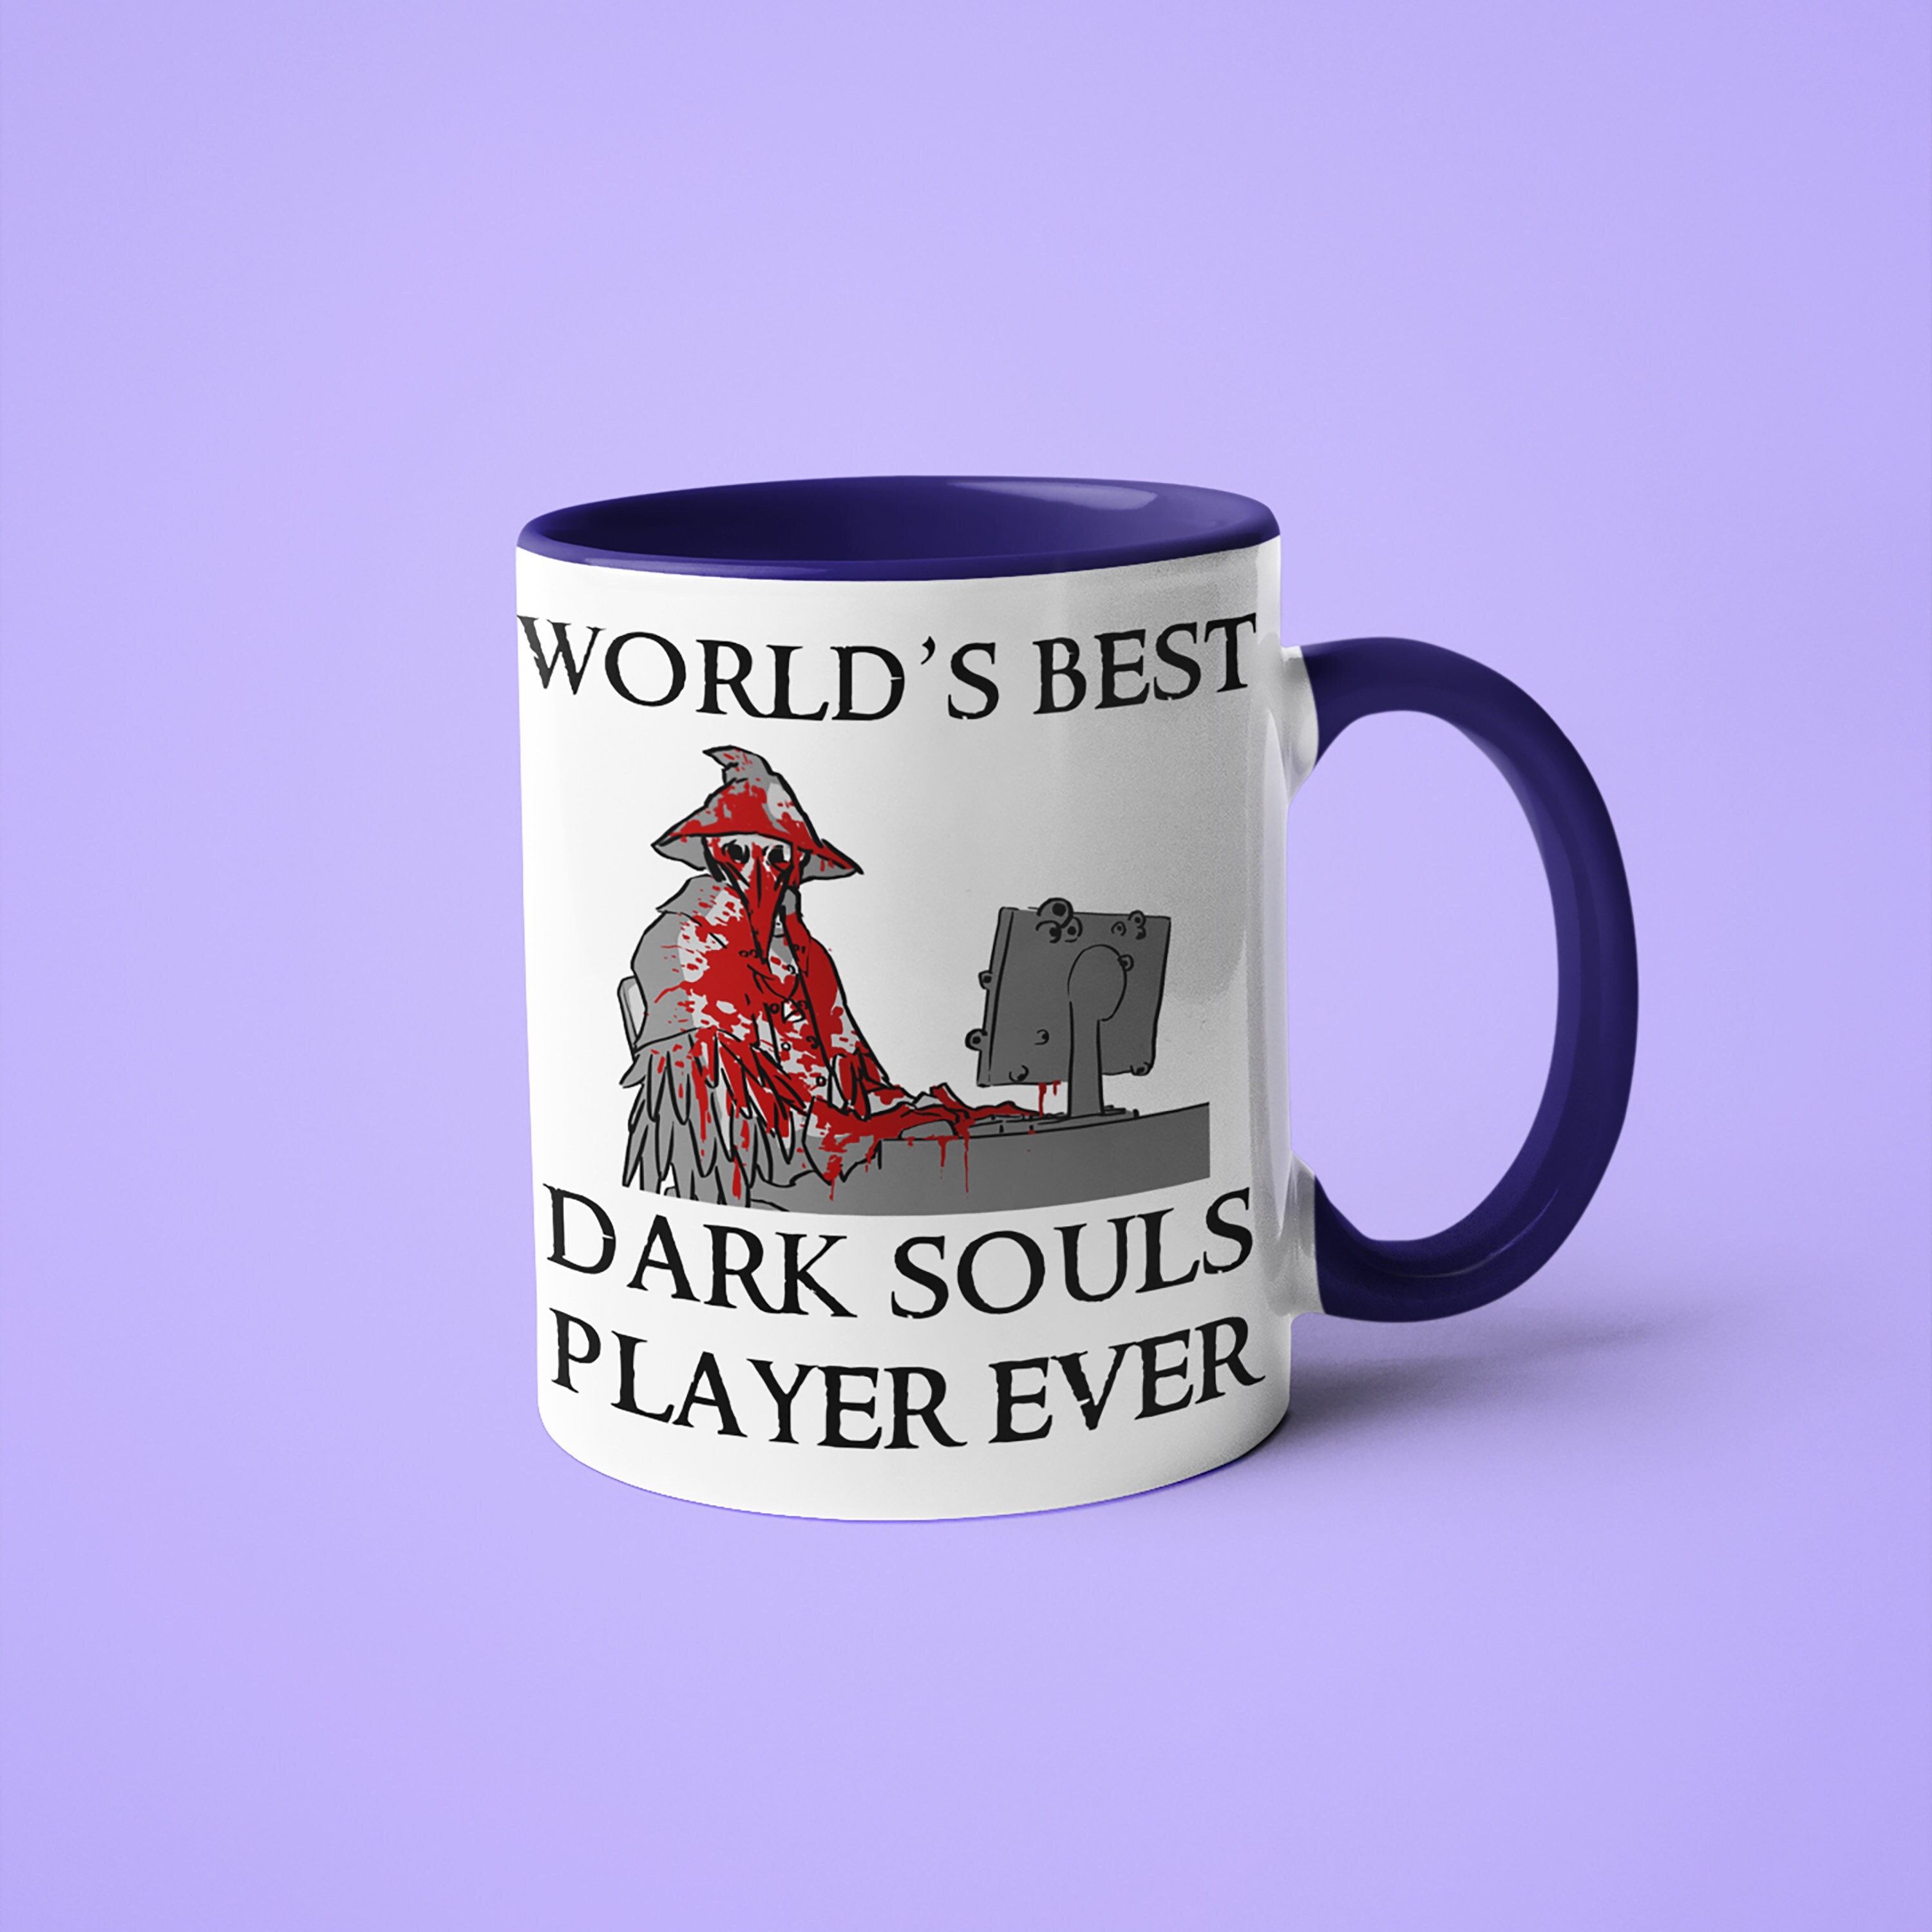 Dark Souls Mugs - Git Gud Scrub Classic Mug RB0909 - Dark Souls Shop